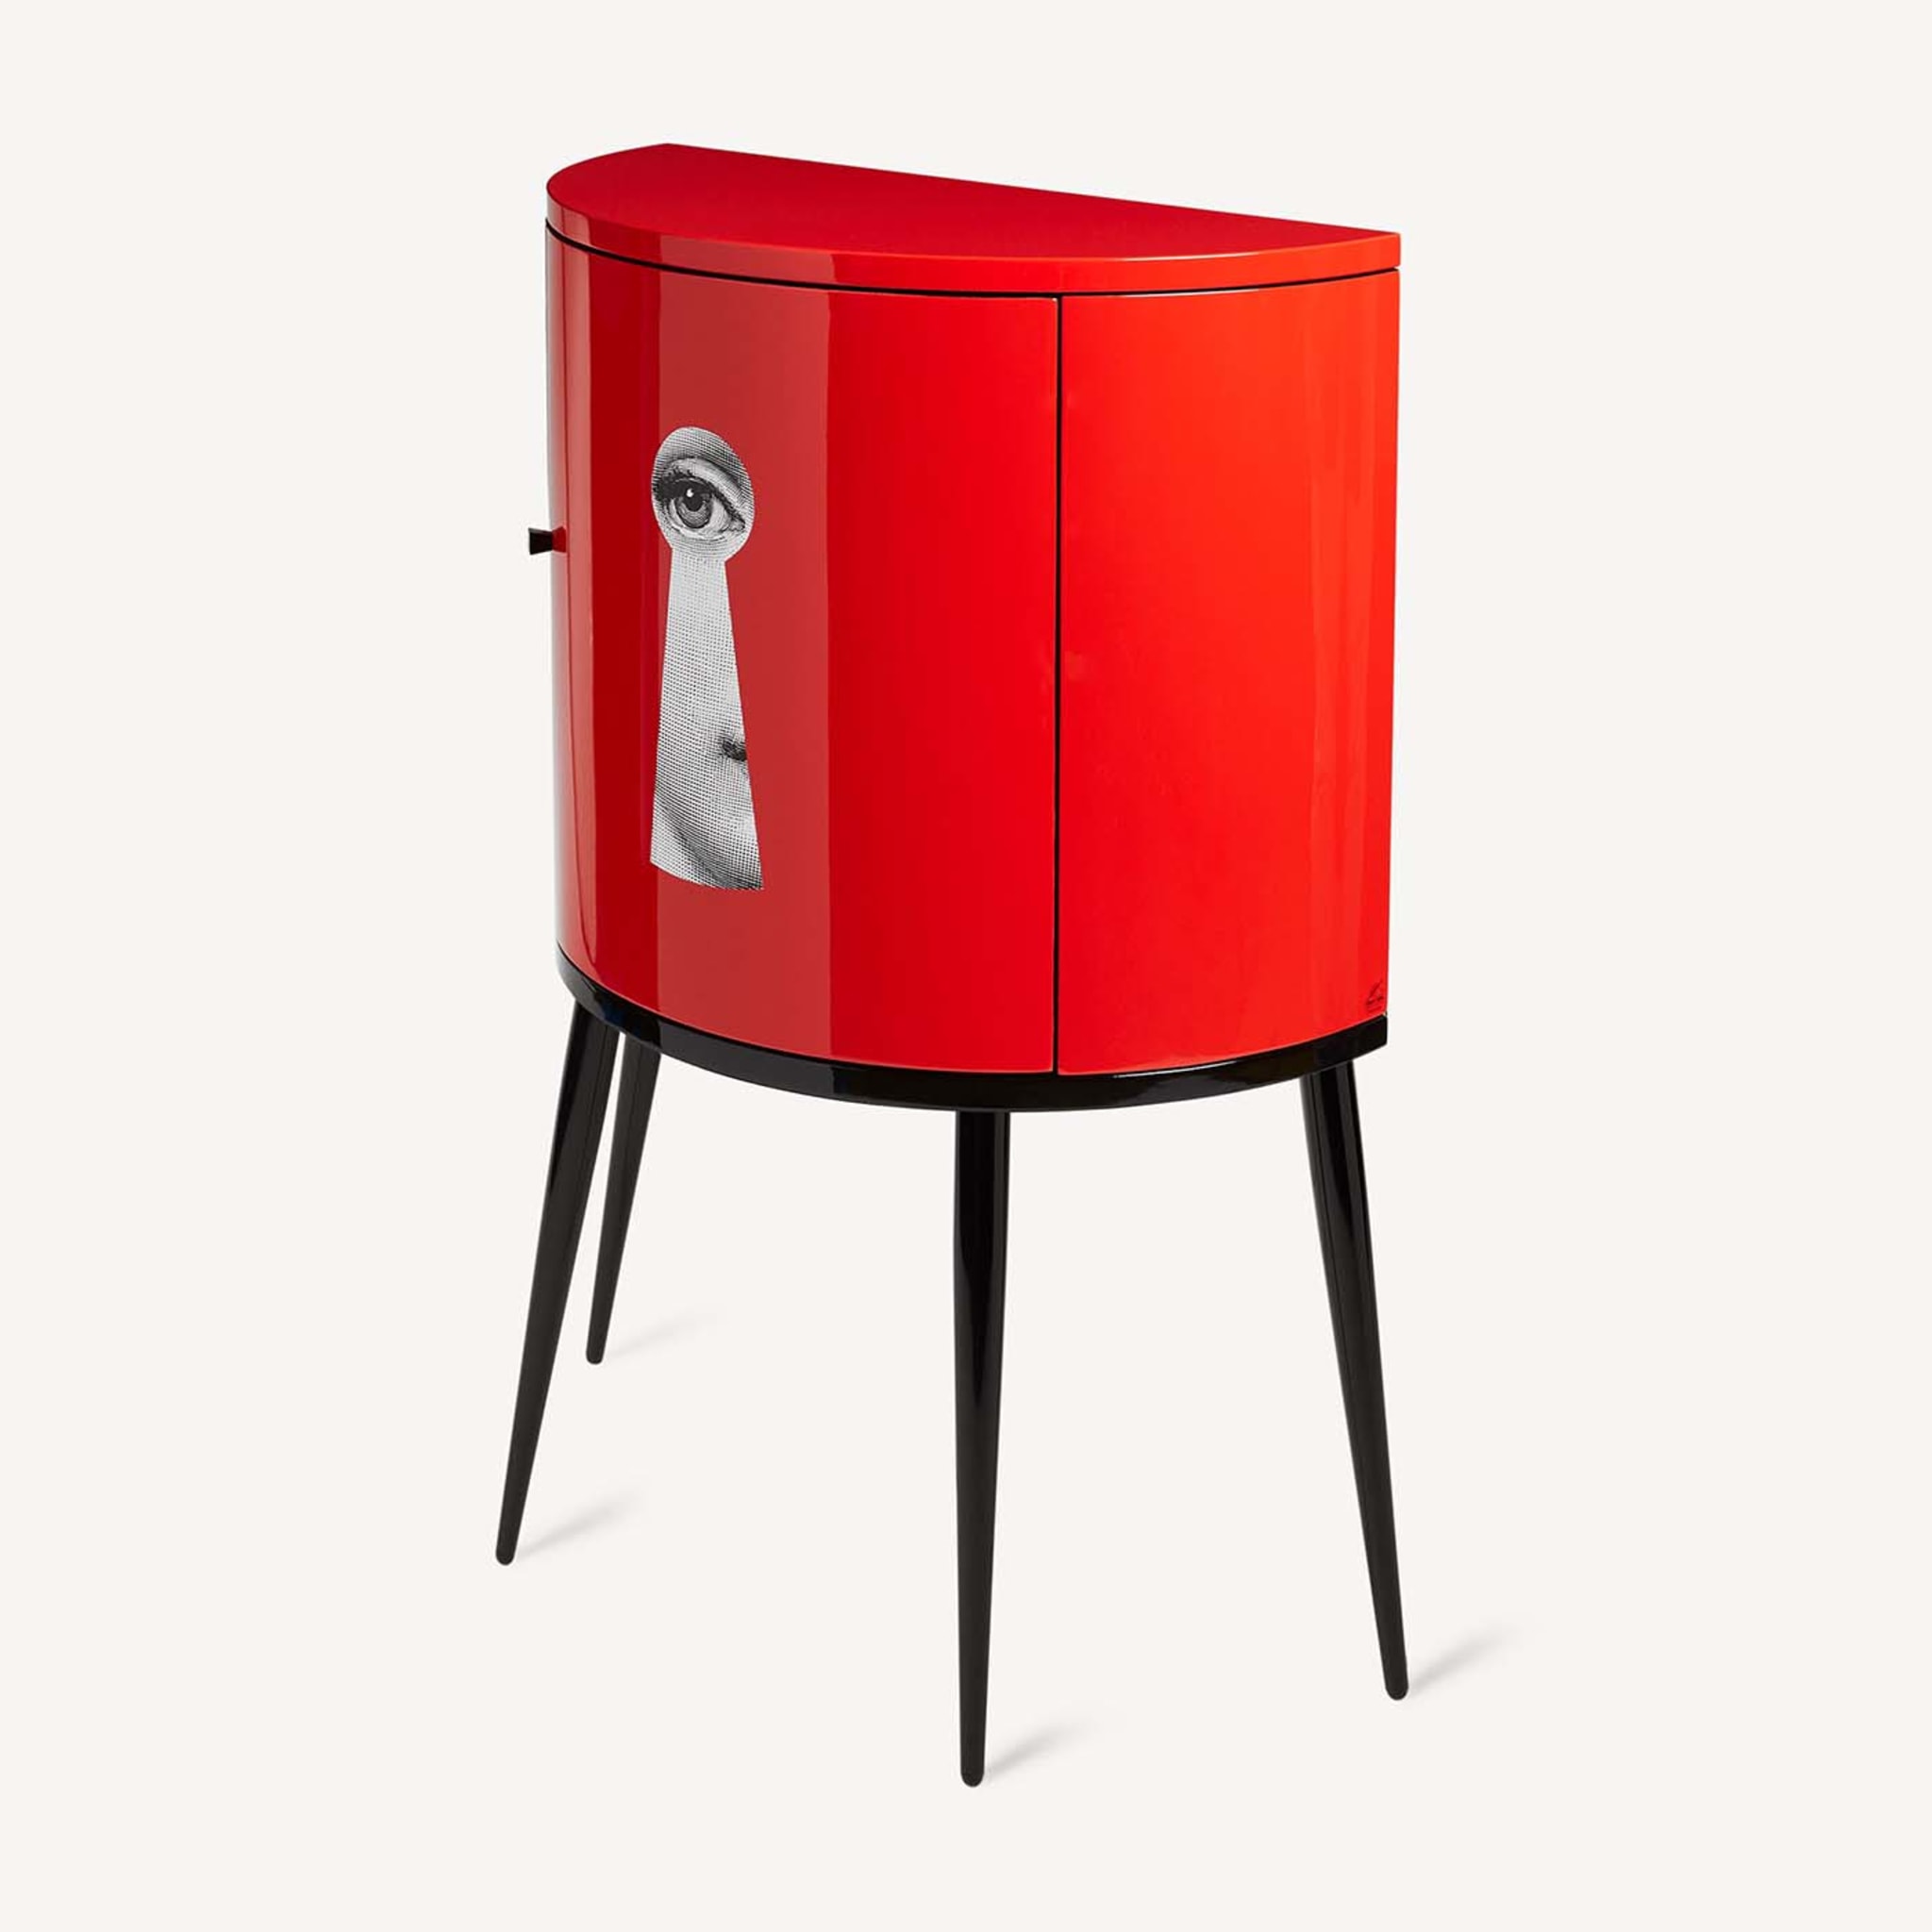 Serratura Red Curved Small Cabinet - Alternative view 3